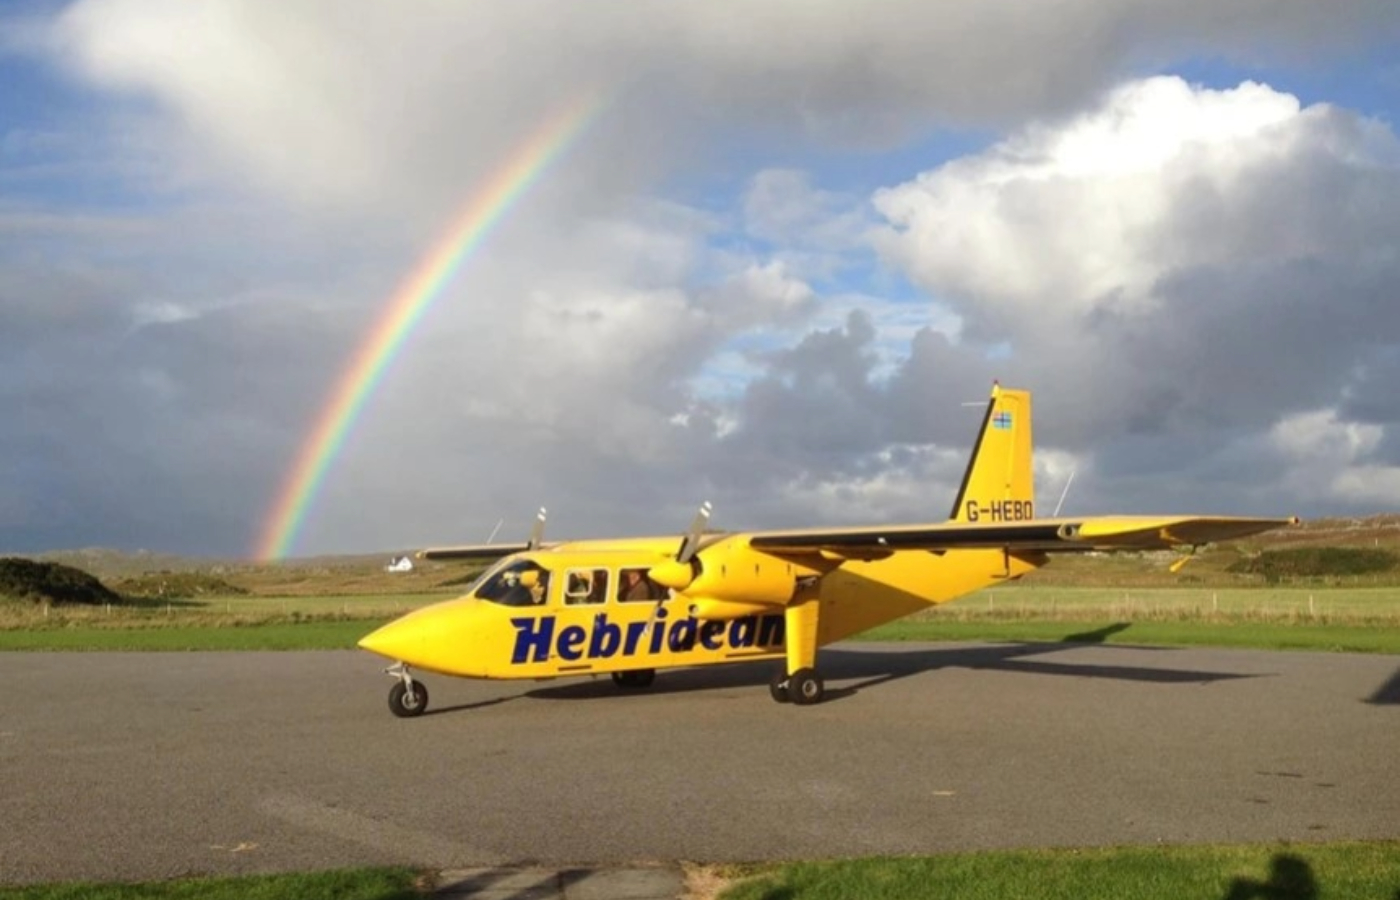 Hebridean Air Services